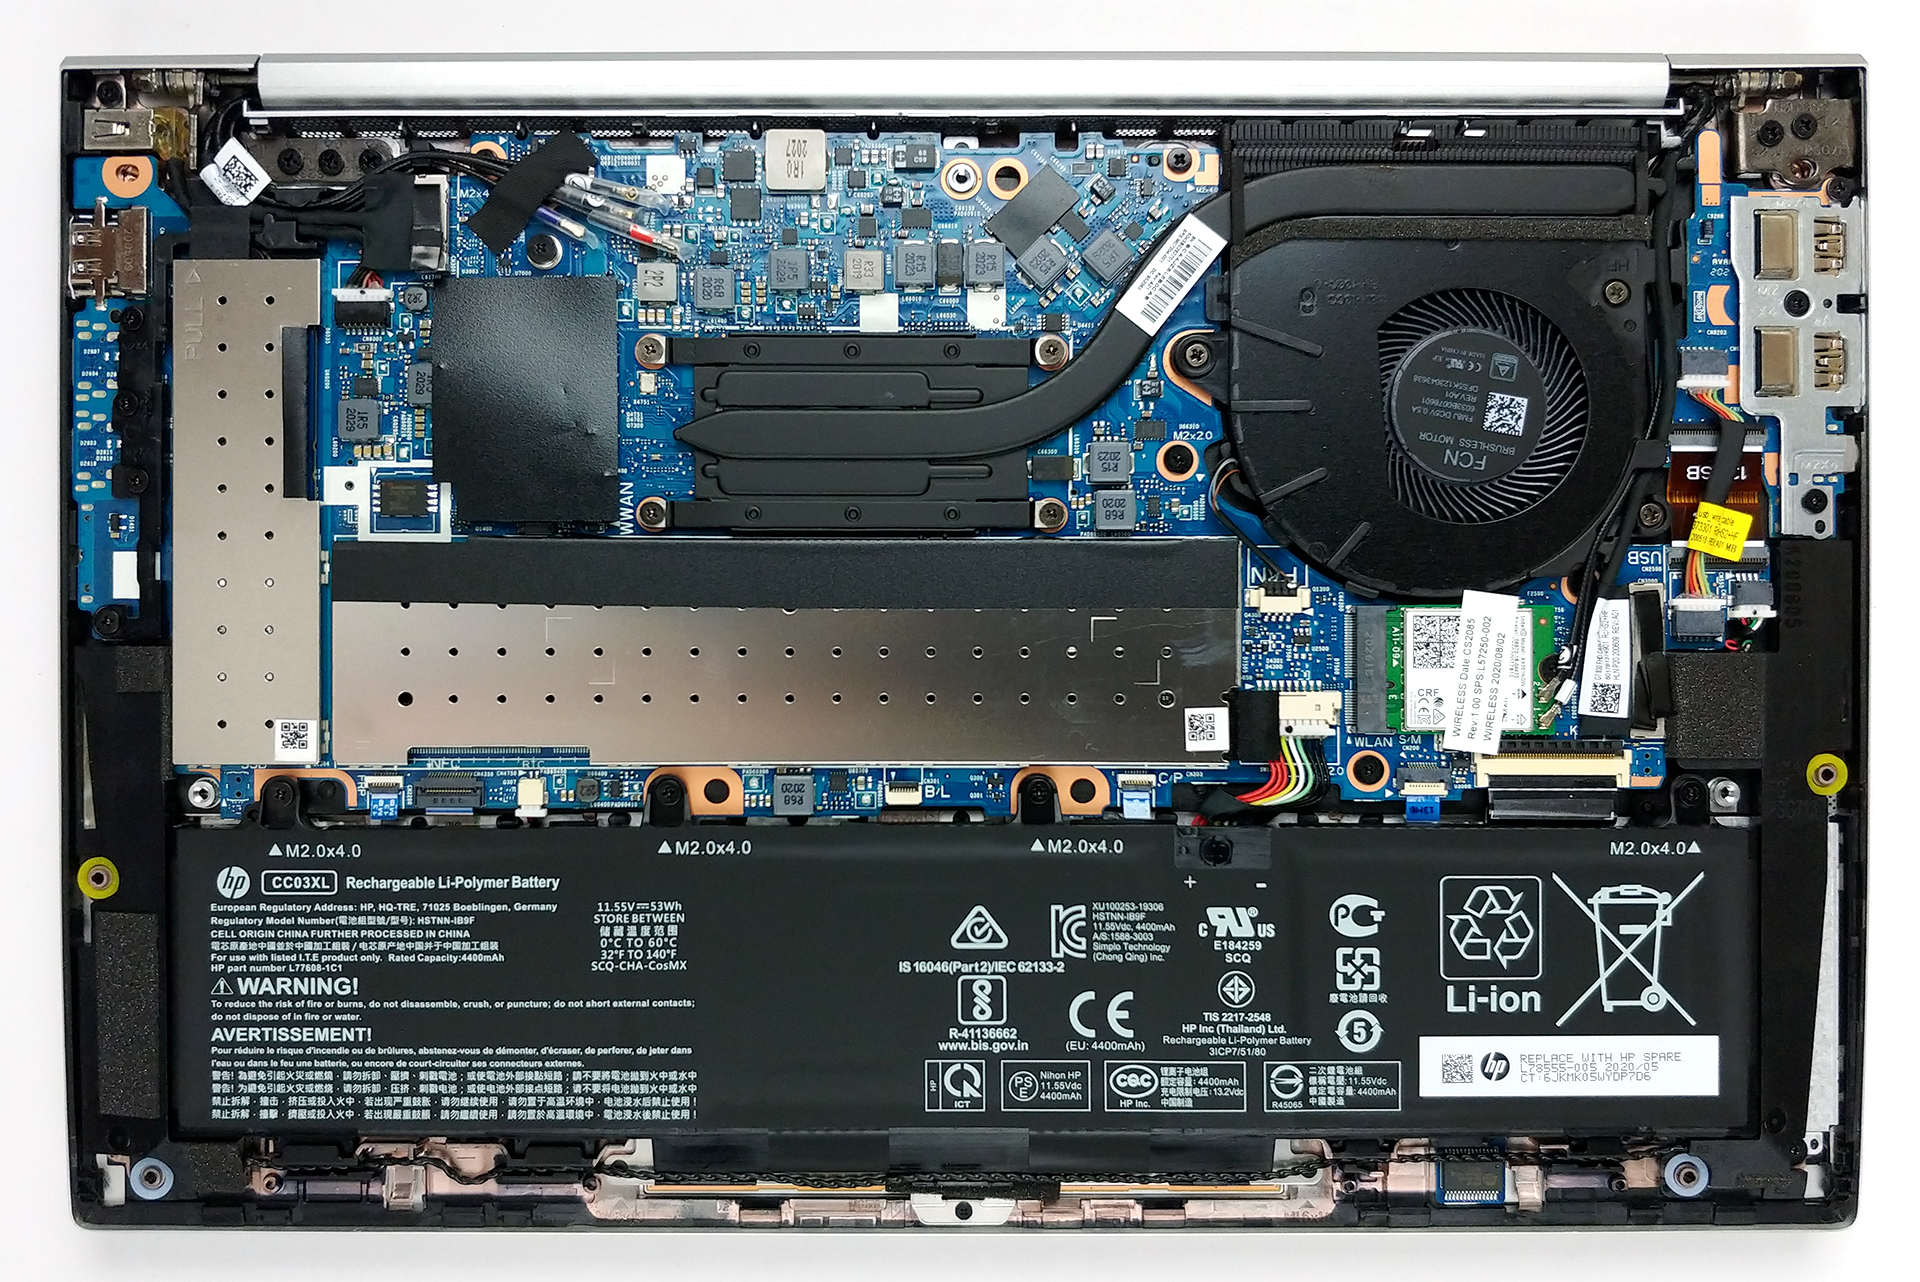 HP EliteBook 830 G7 Notebook - USBS